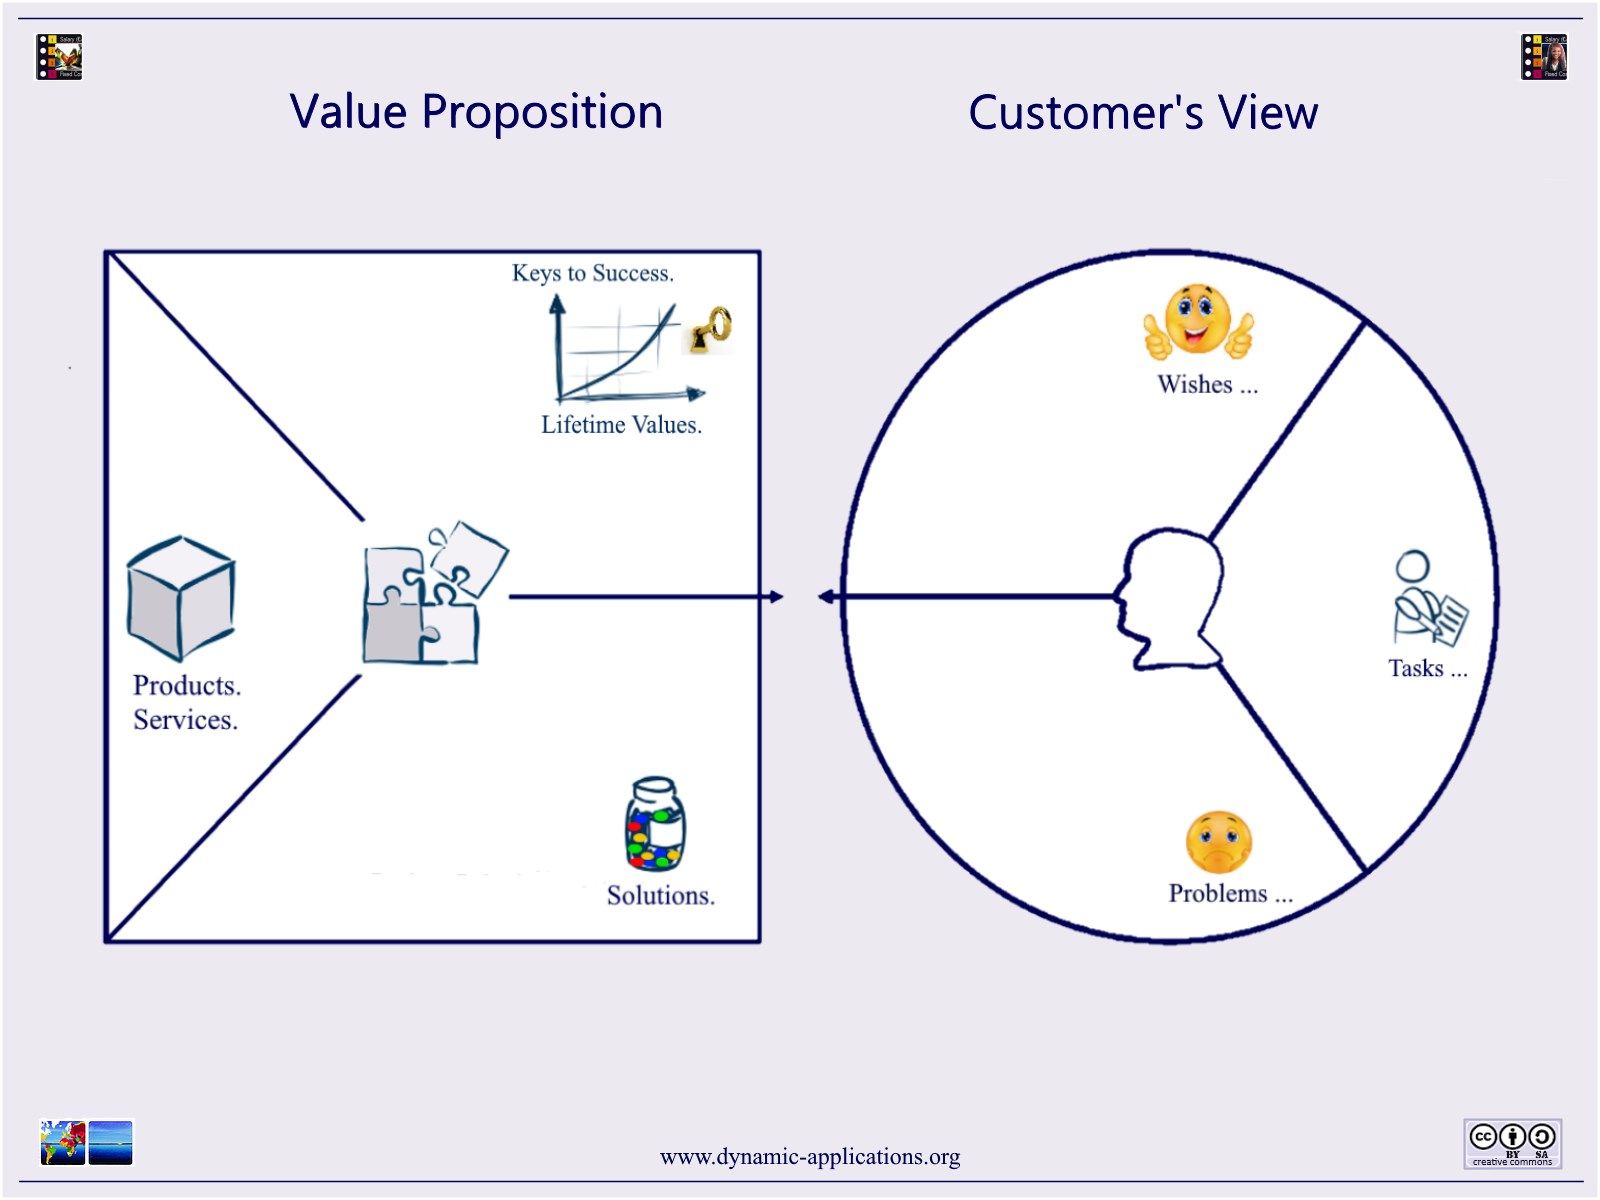 Value Proposition Canvas - define your service in Lifetime Value ($€& / h).